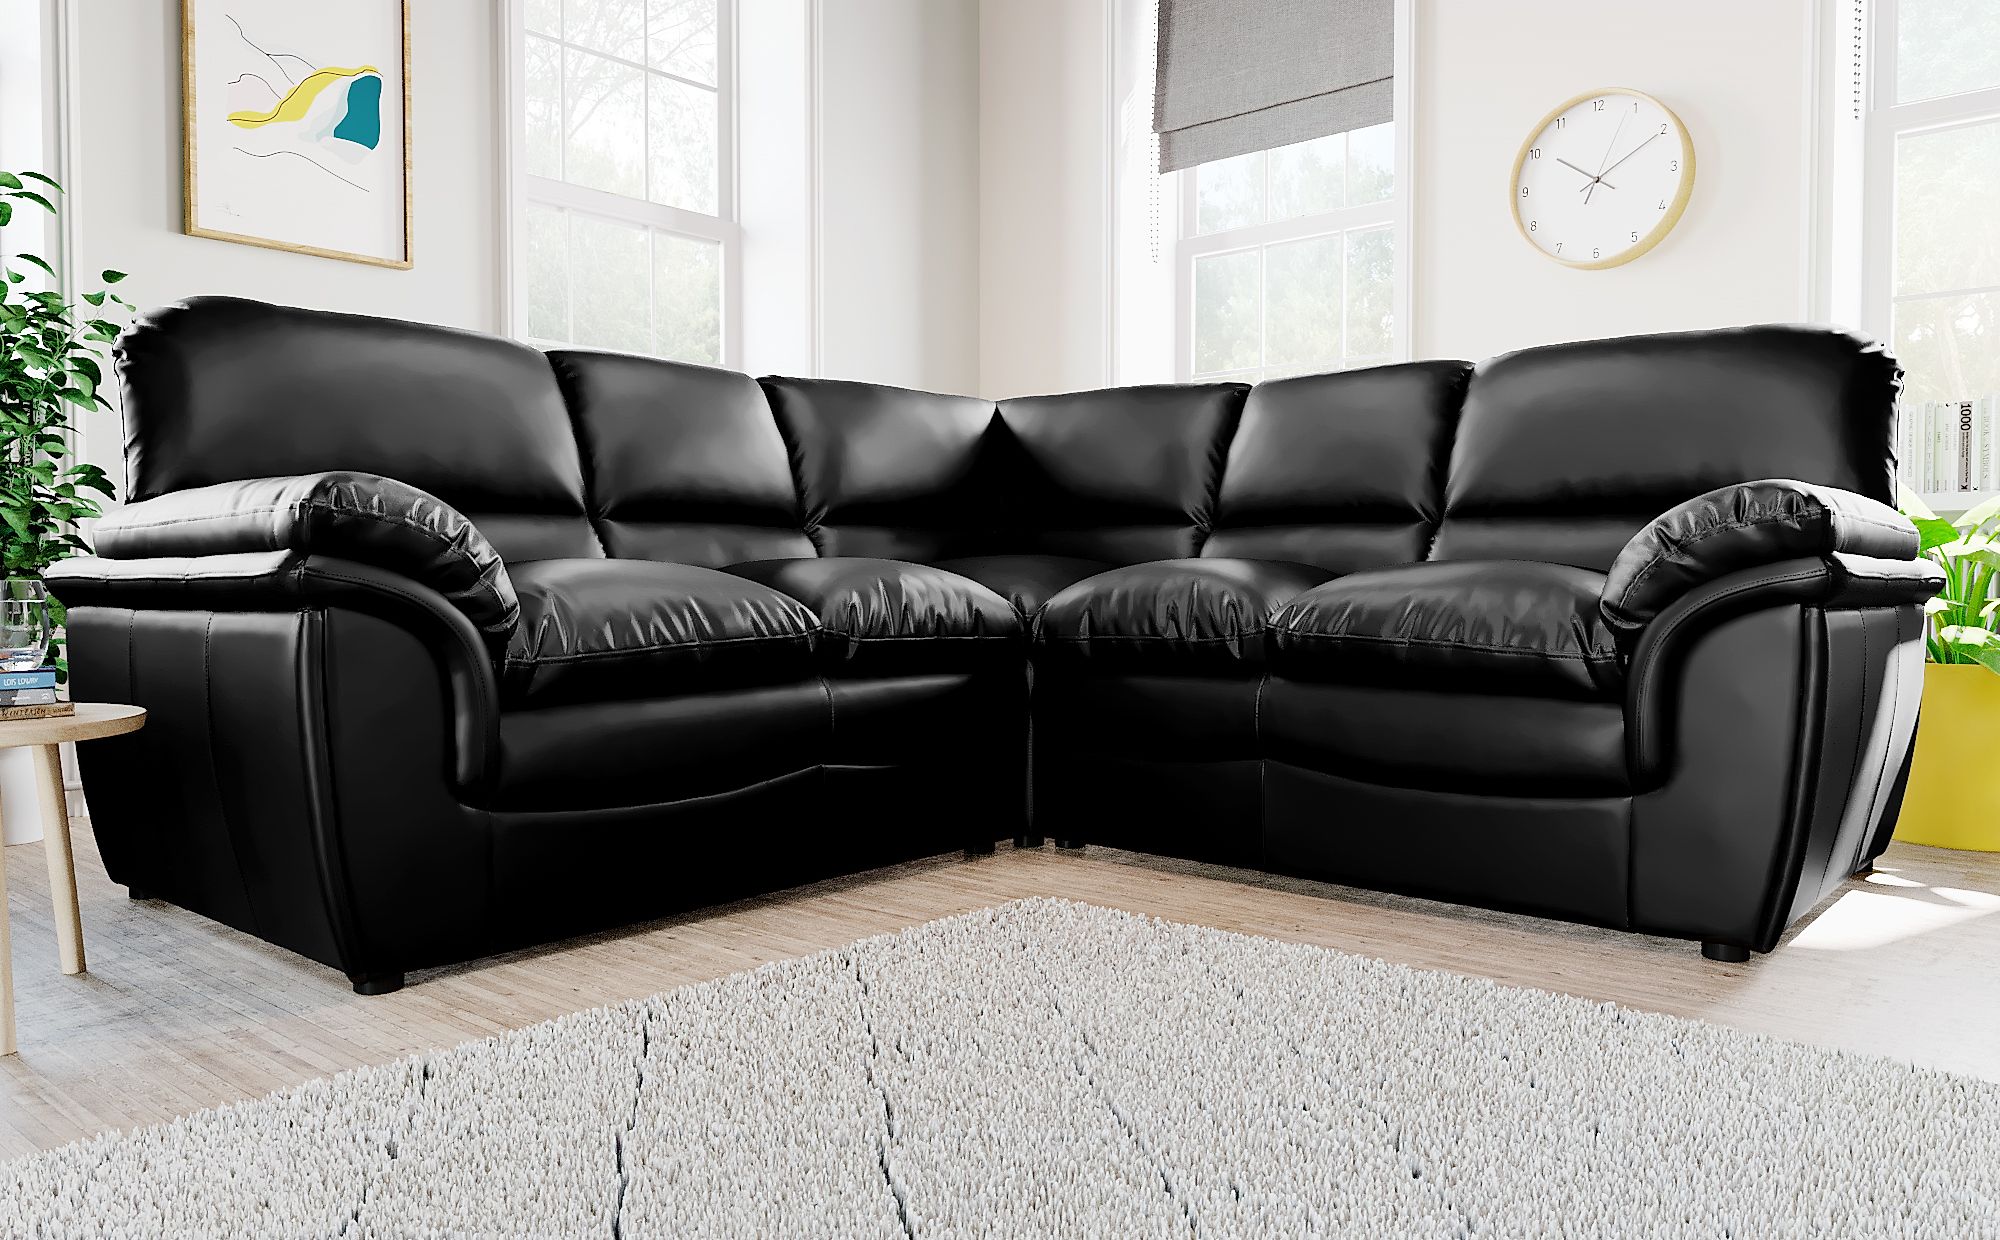 rochester black leather sofa